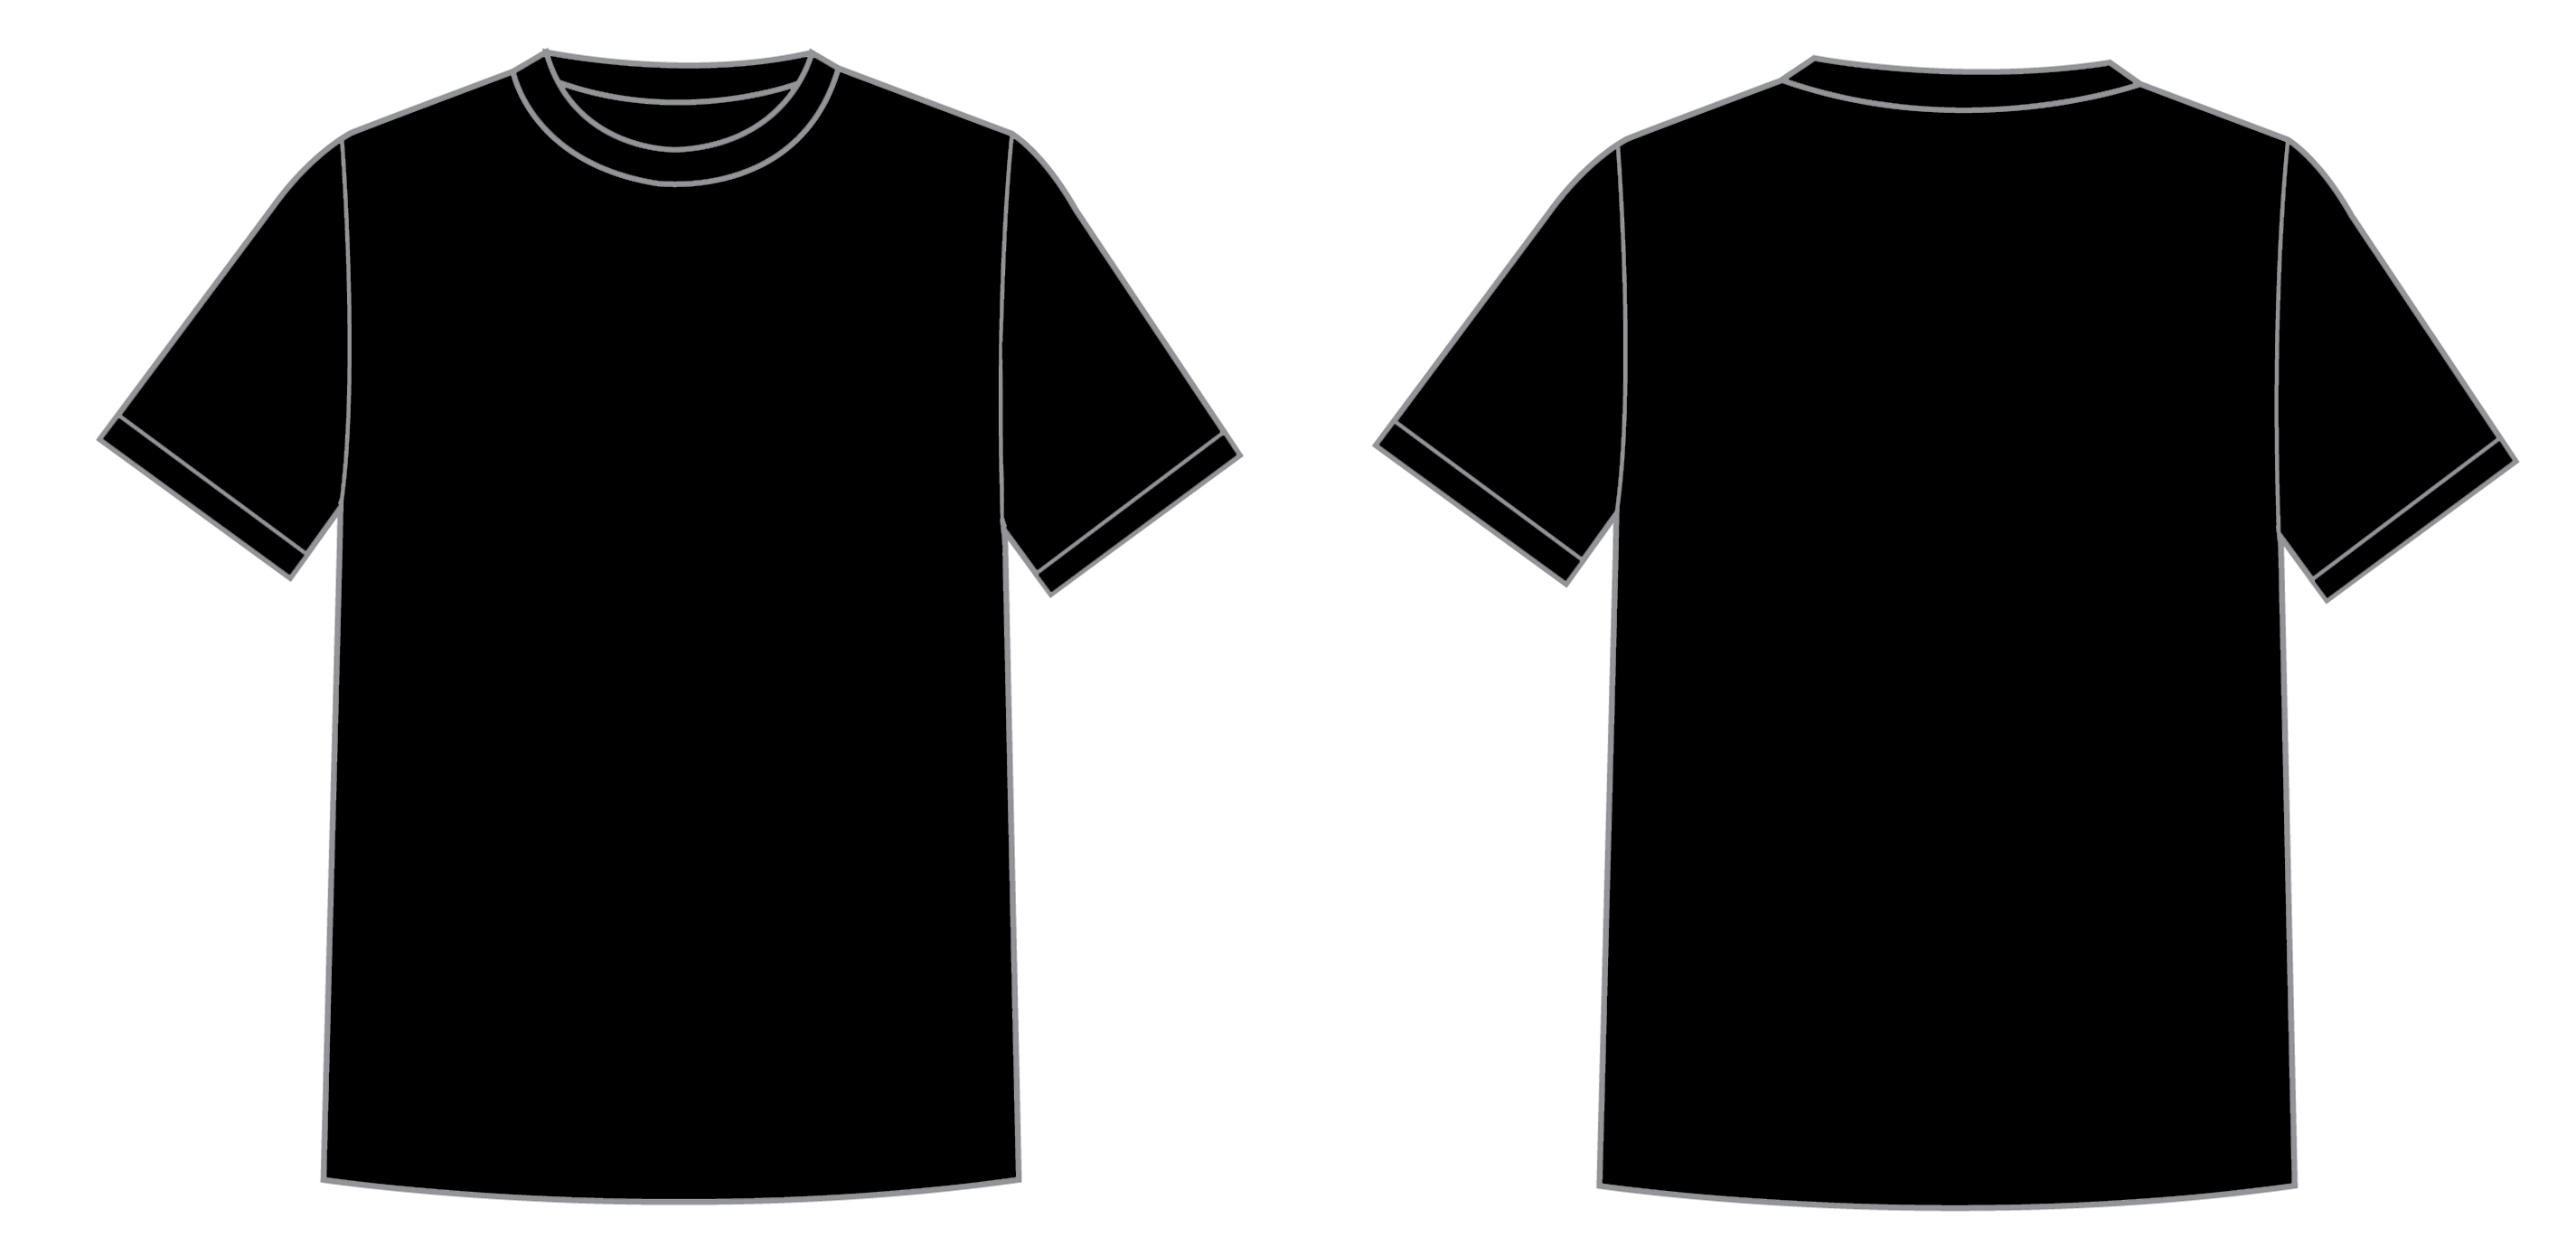 Blank Black T Shirt Template